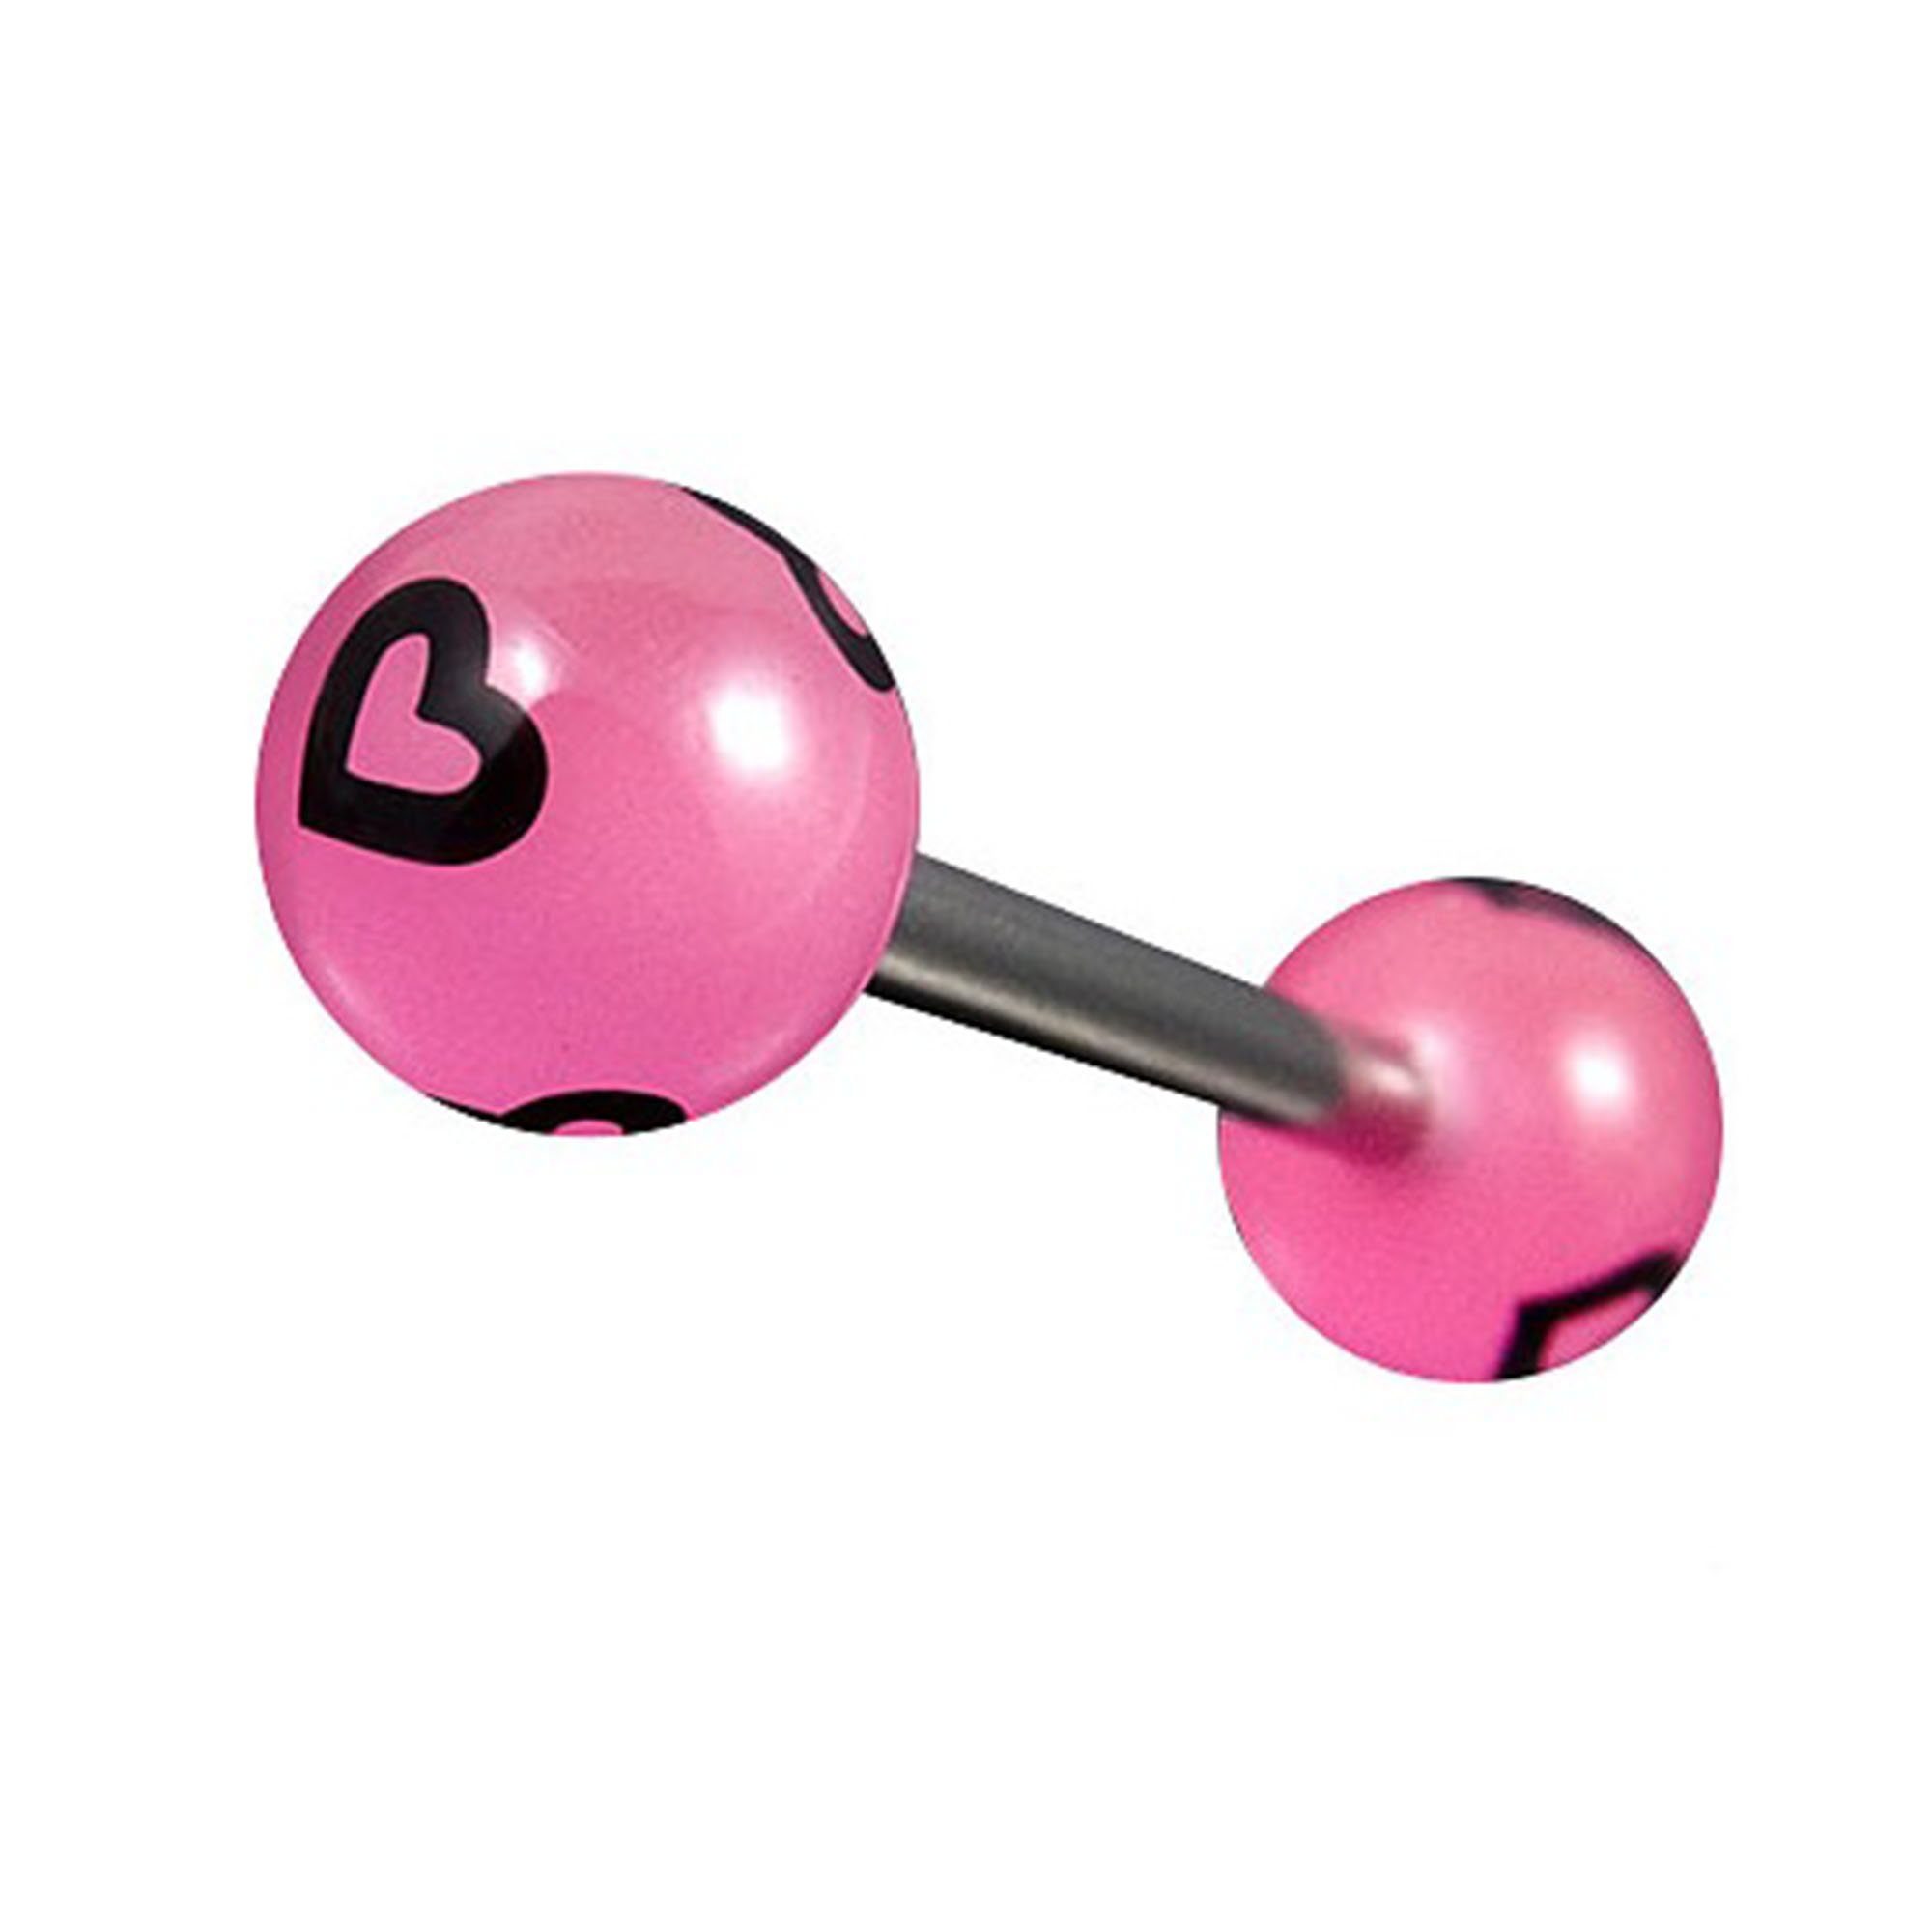 Ohr Kugel Pink Barbell Piercing-Set Ball Stecker Zungenpiercing Piercingfaktor Tragus Logo Hantel Stab Herz, Intim Helix Oral Kugel Taffstyle Brust